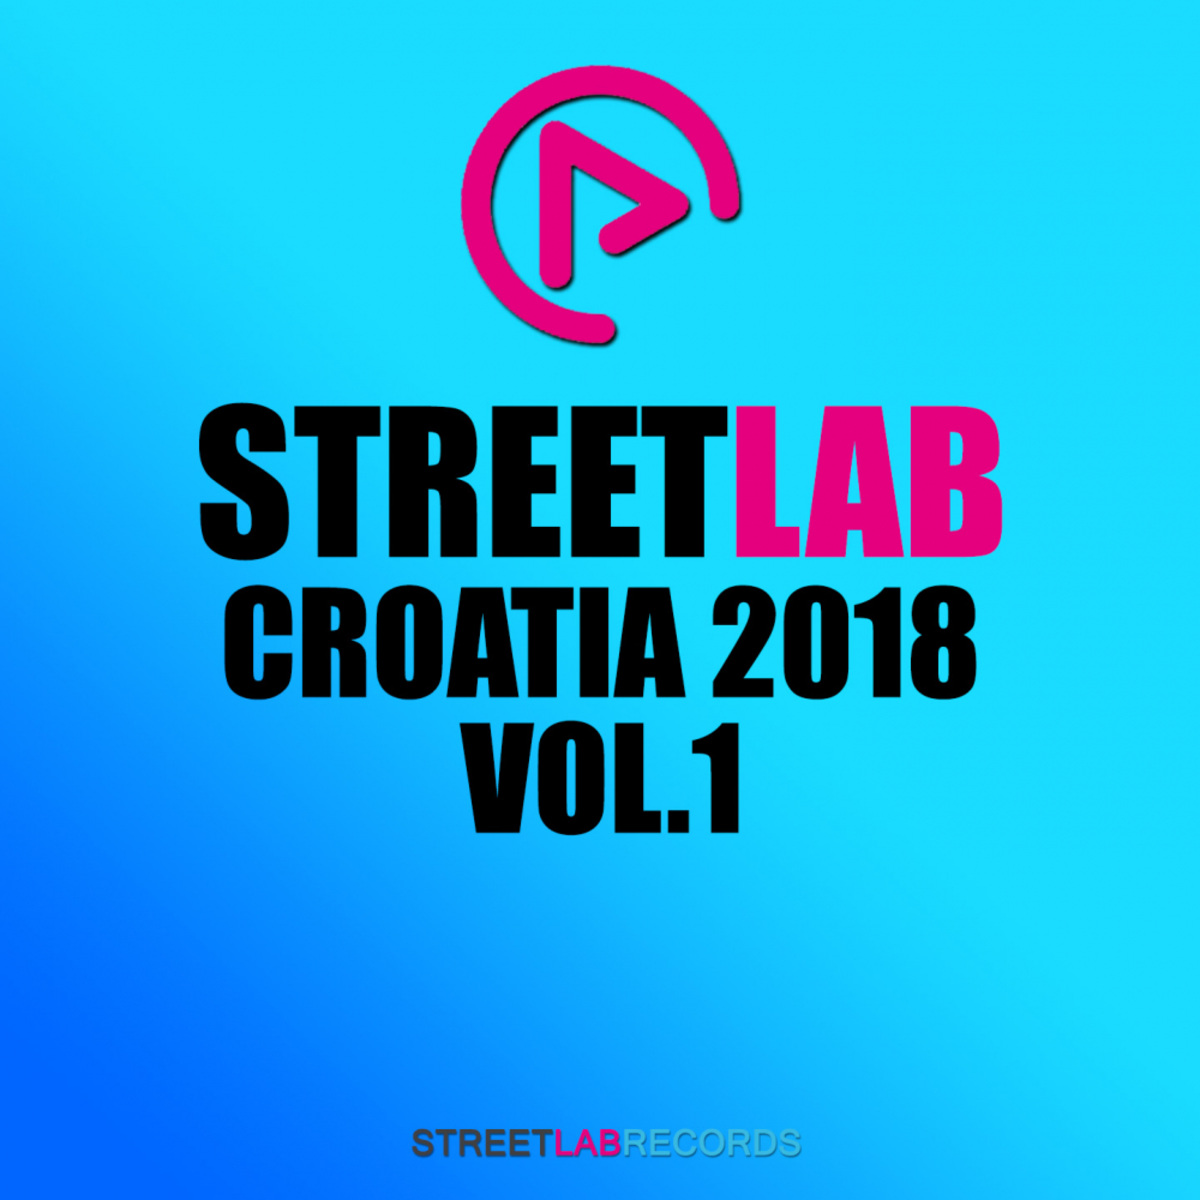 VA - Streetlab Croatia 2018, Vol. 1 / Streetlab Records